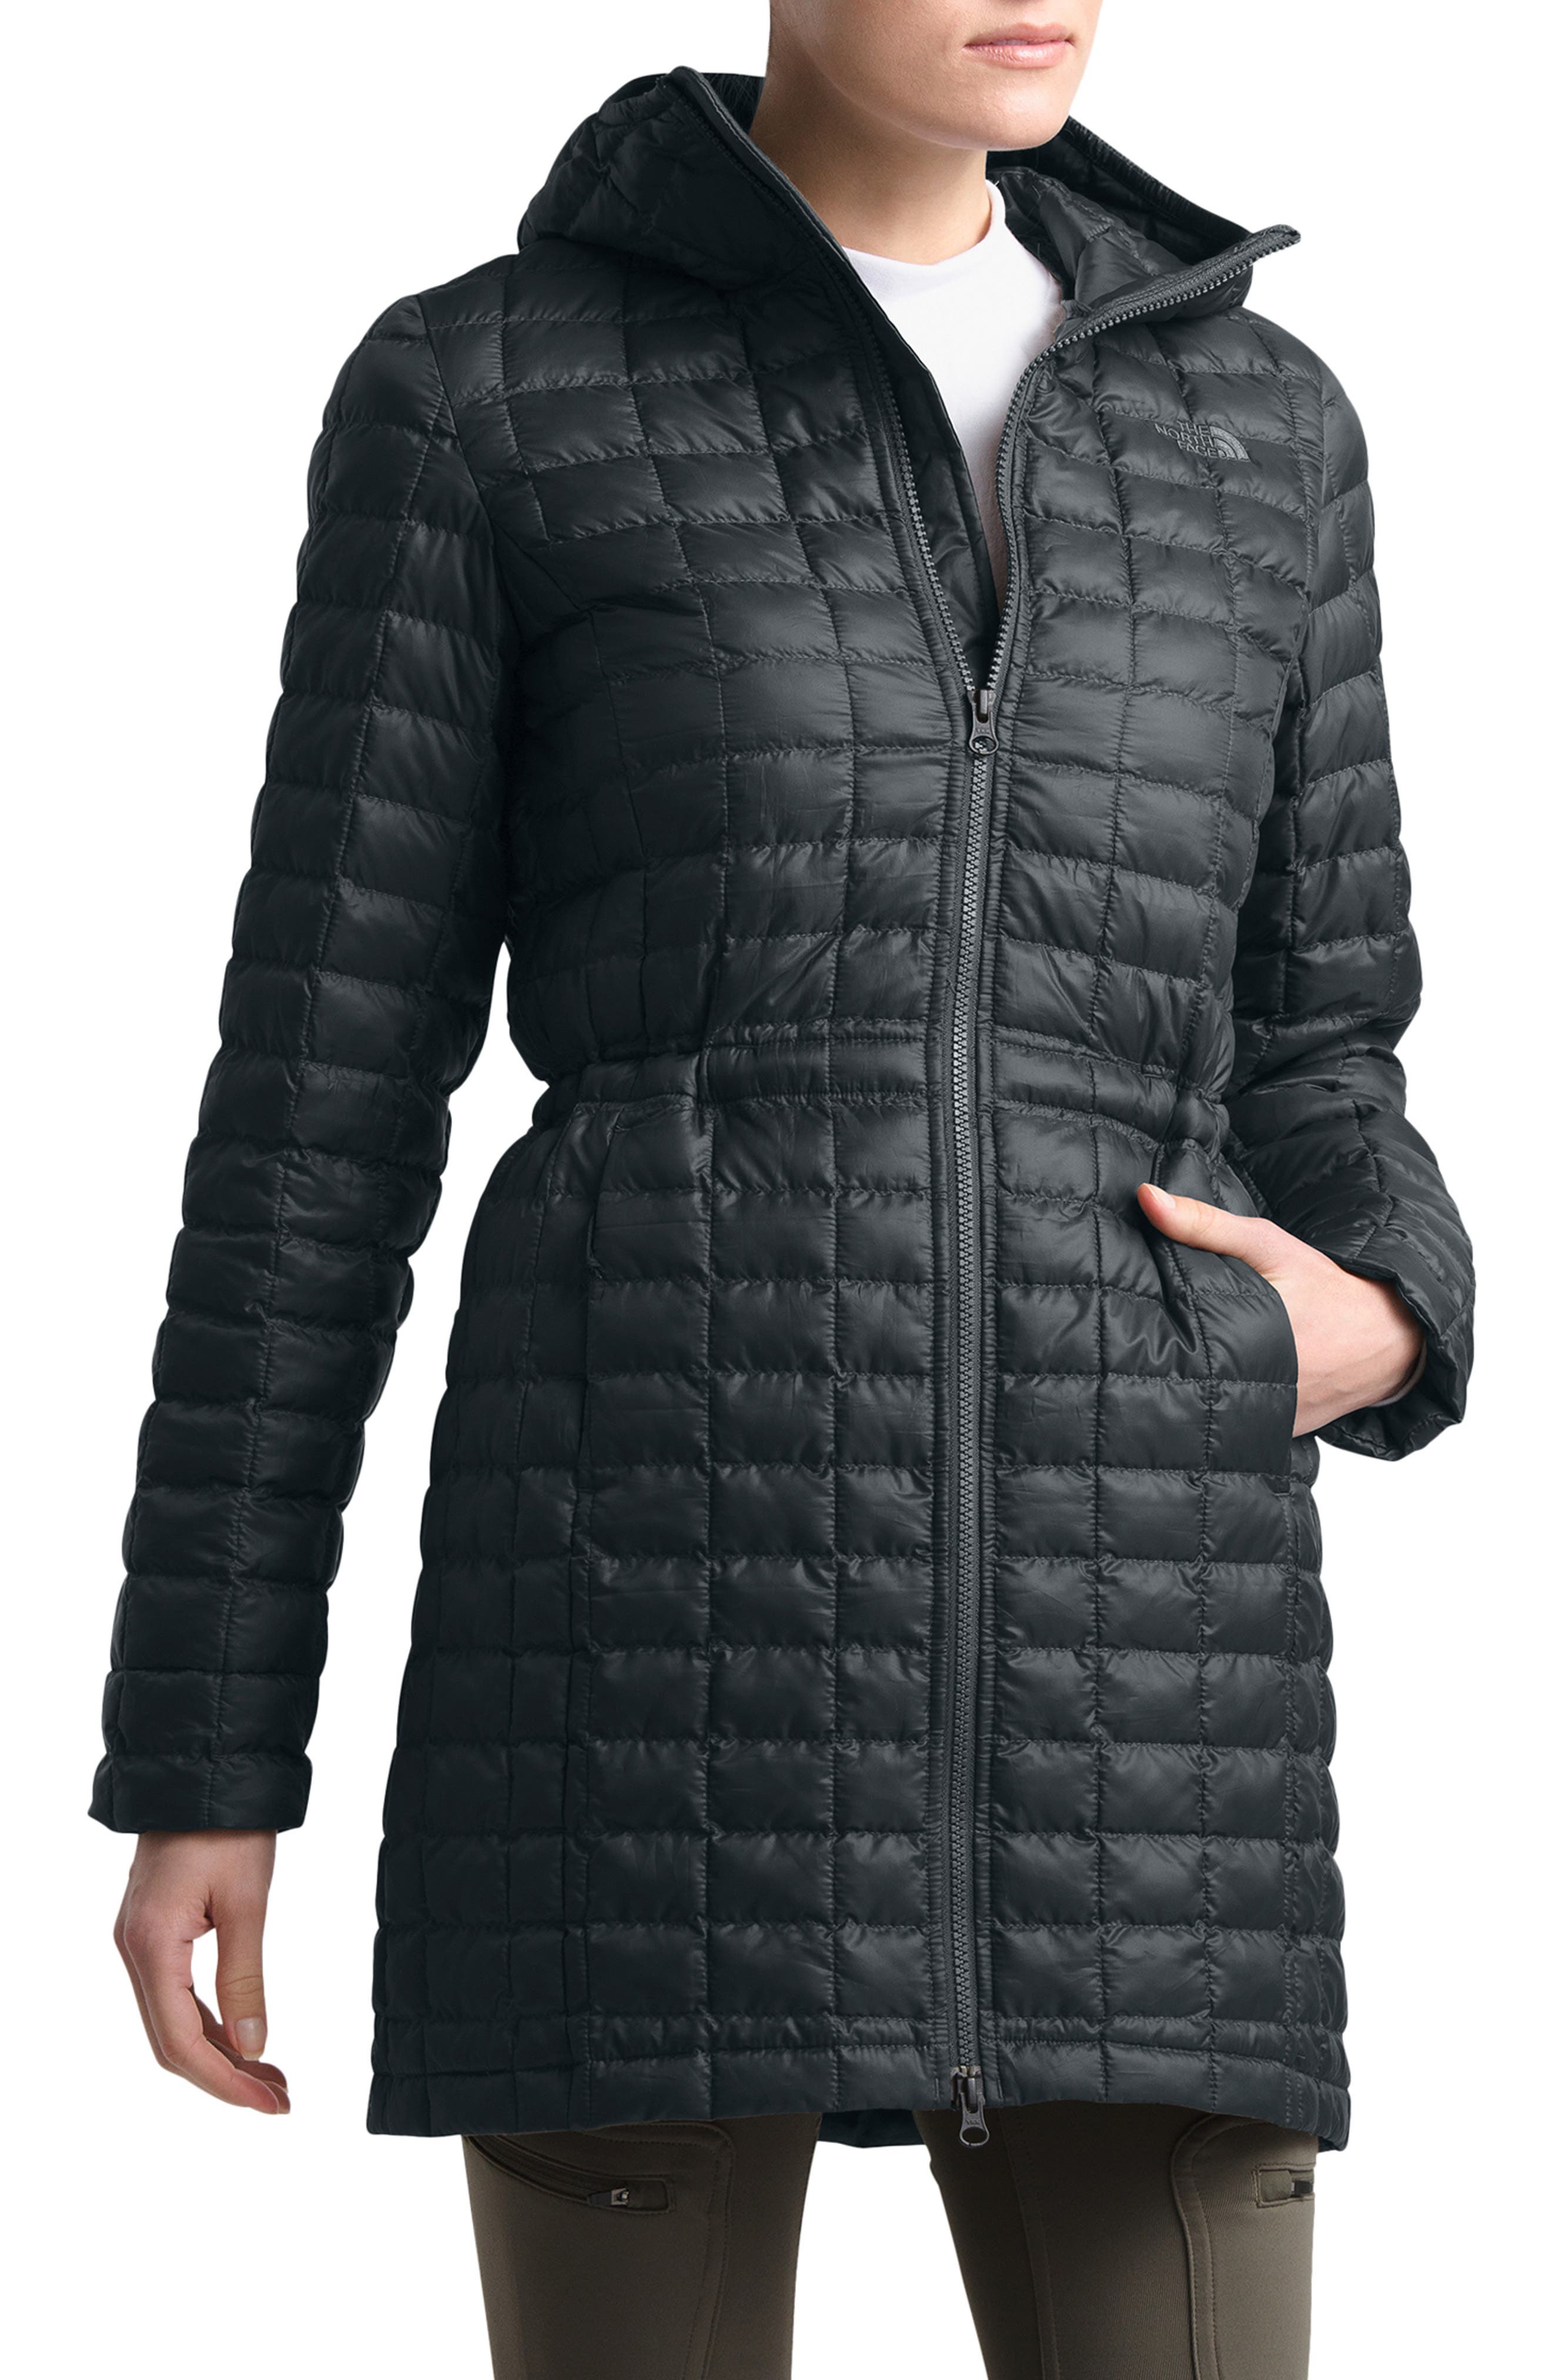 north face women's winter jackets sale